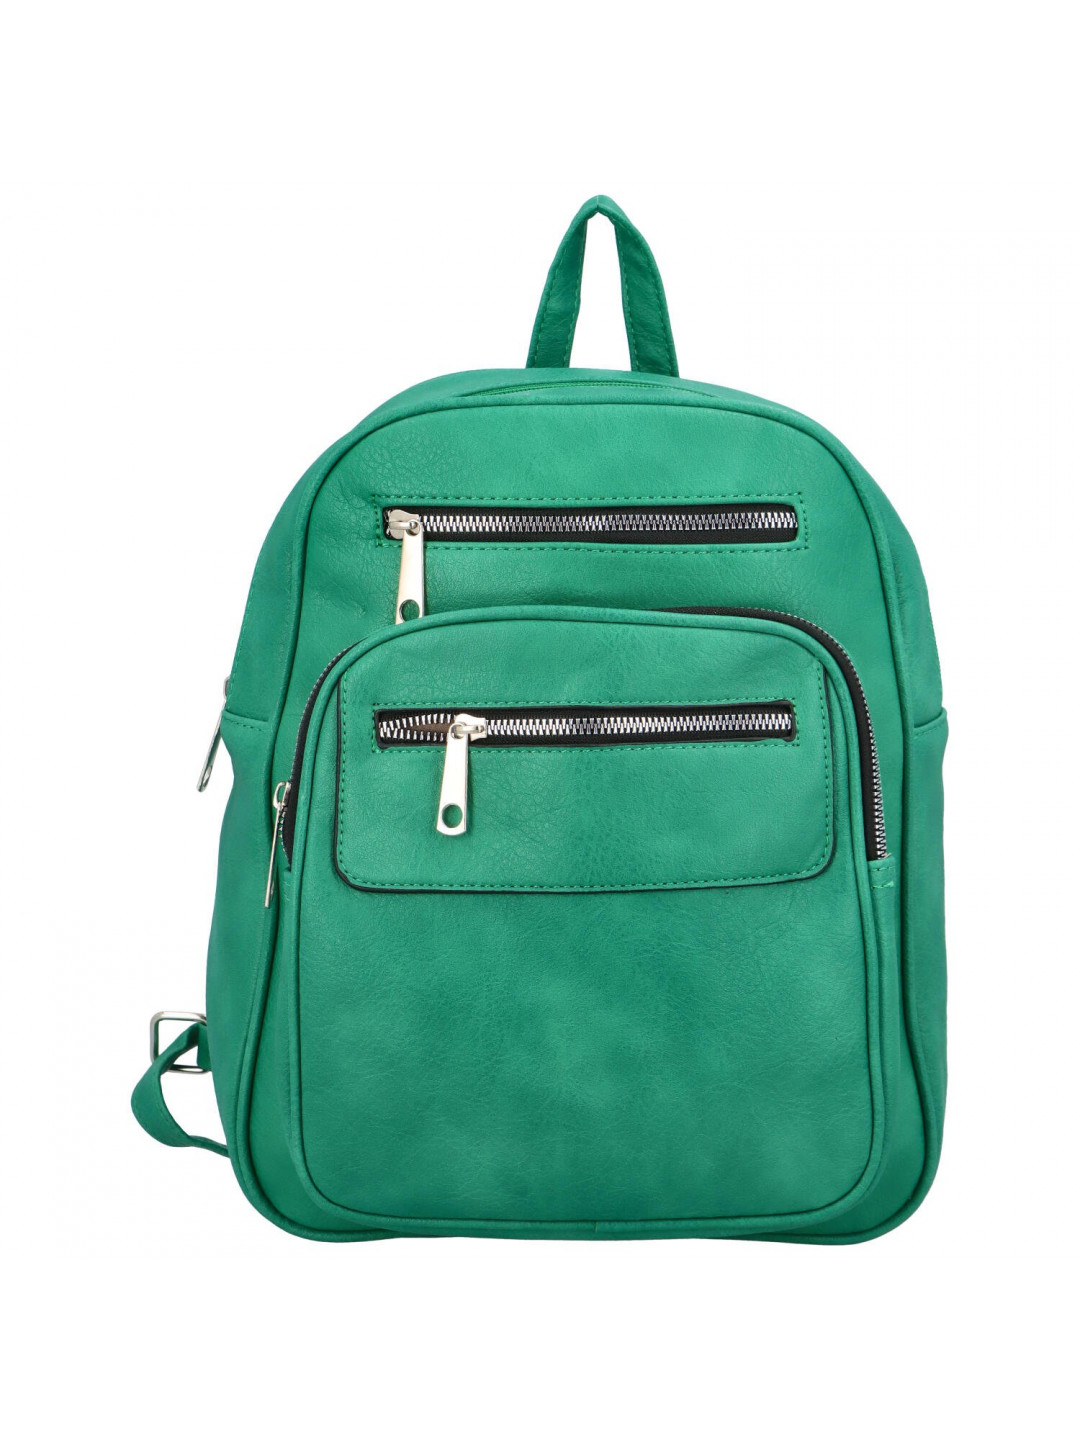 Trendový dámský koženkový batoh Amanta výrazná zelená